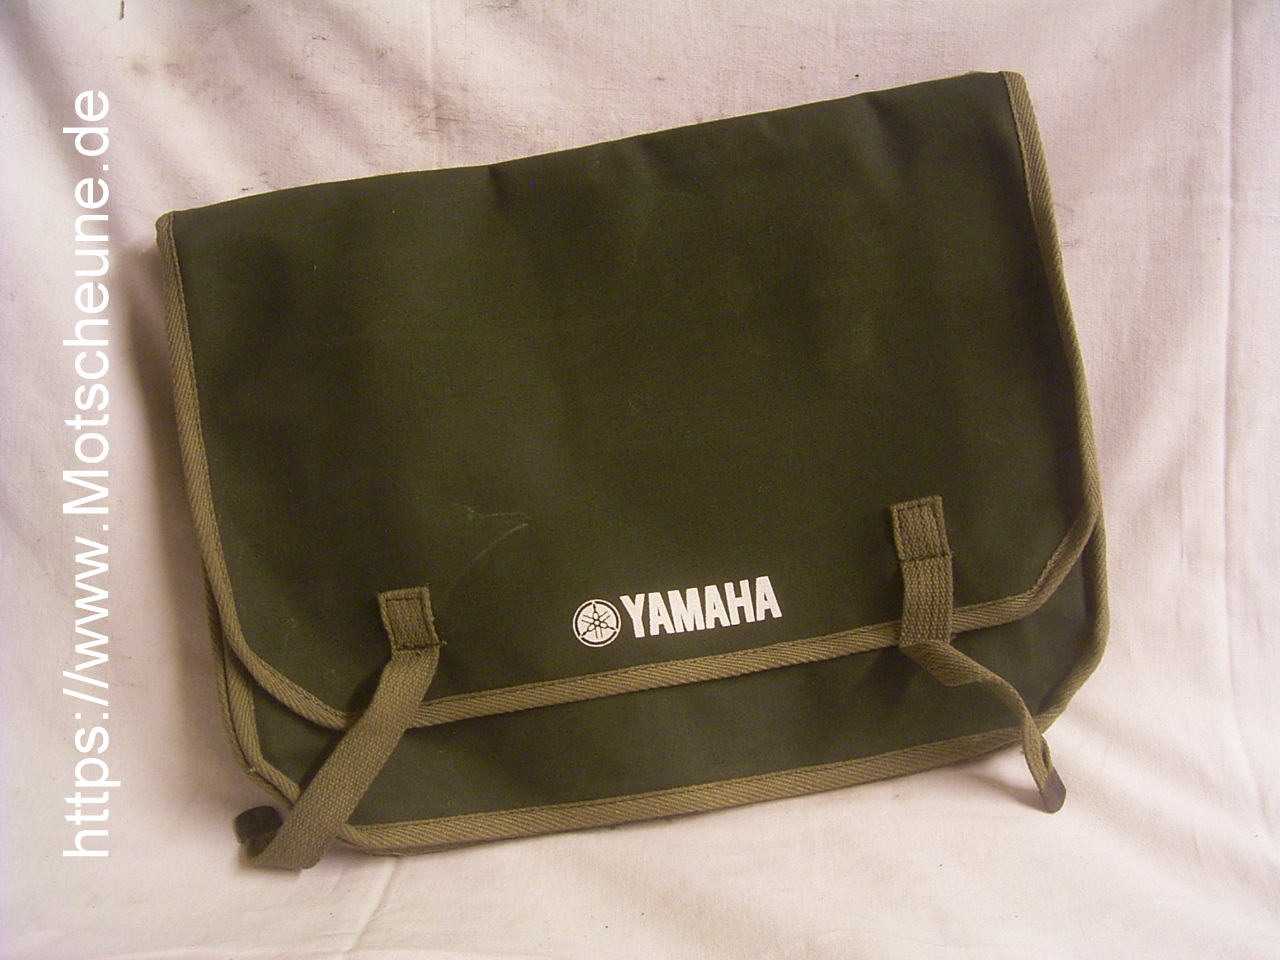 Tasche Yamaha olivgrün